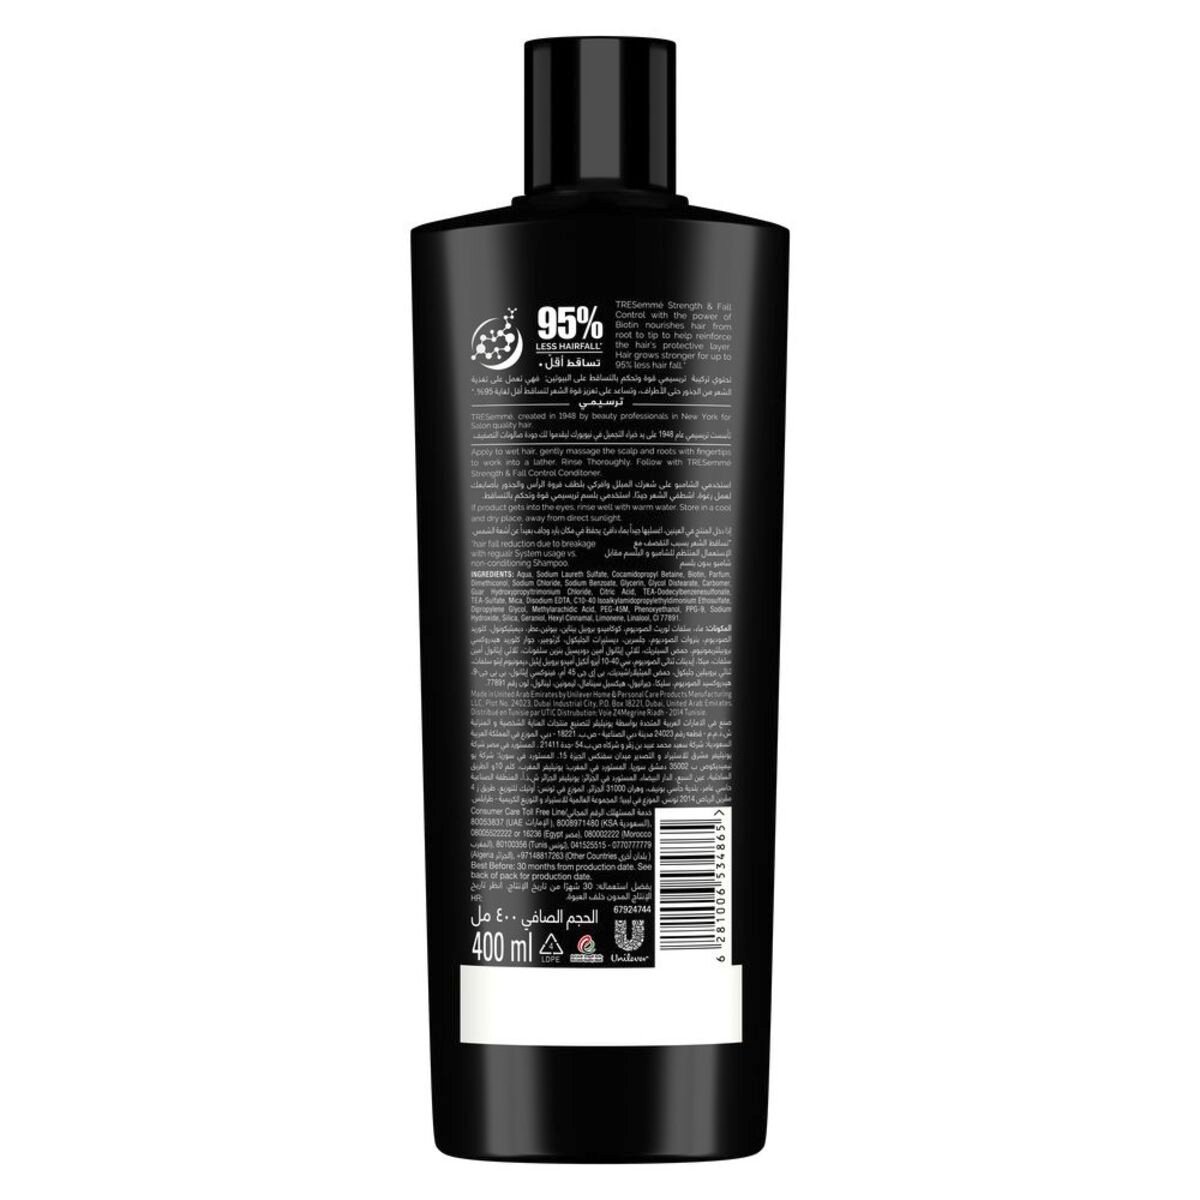 TRESemme Shampoo Strength & Fall Control 400 ml